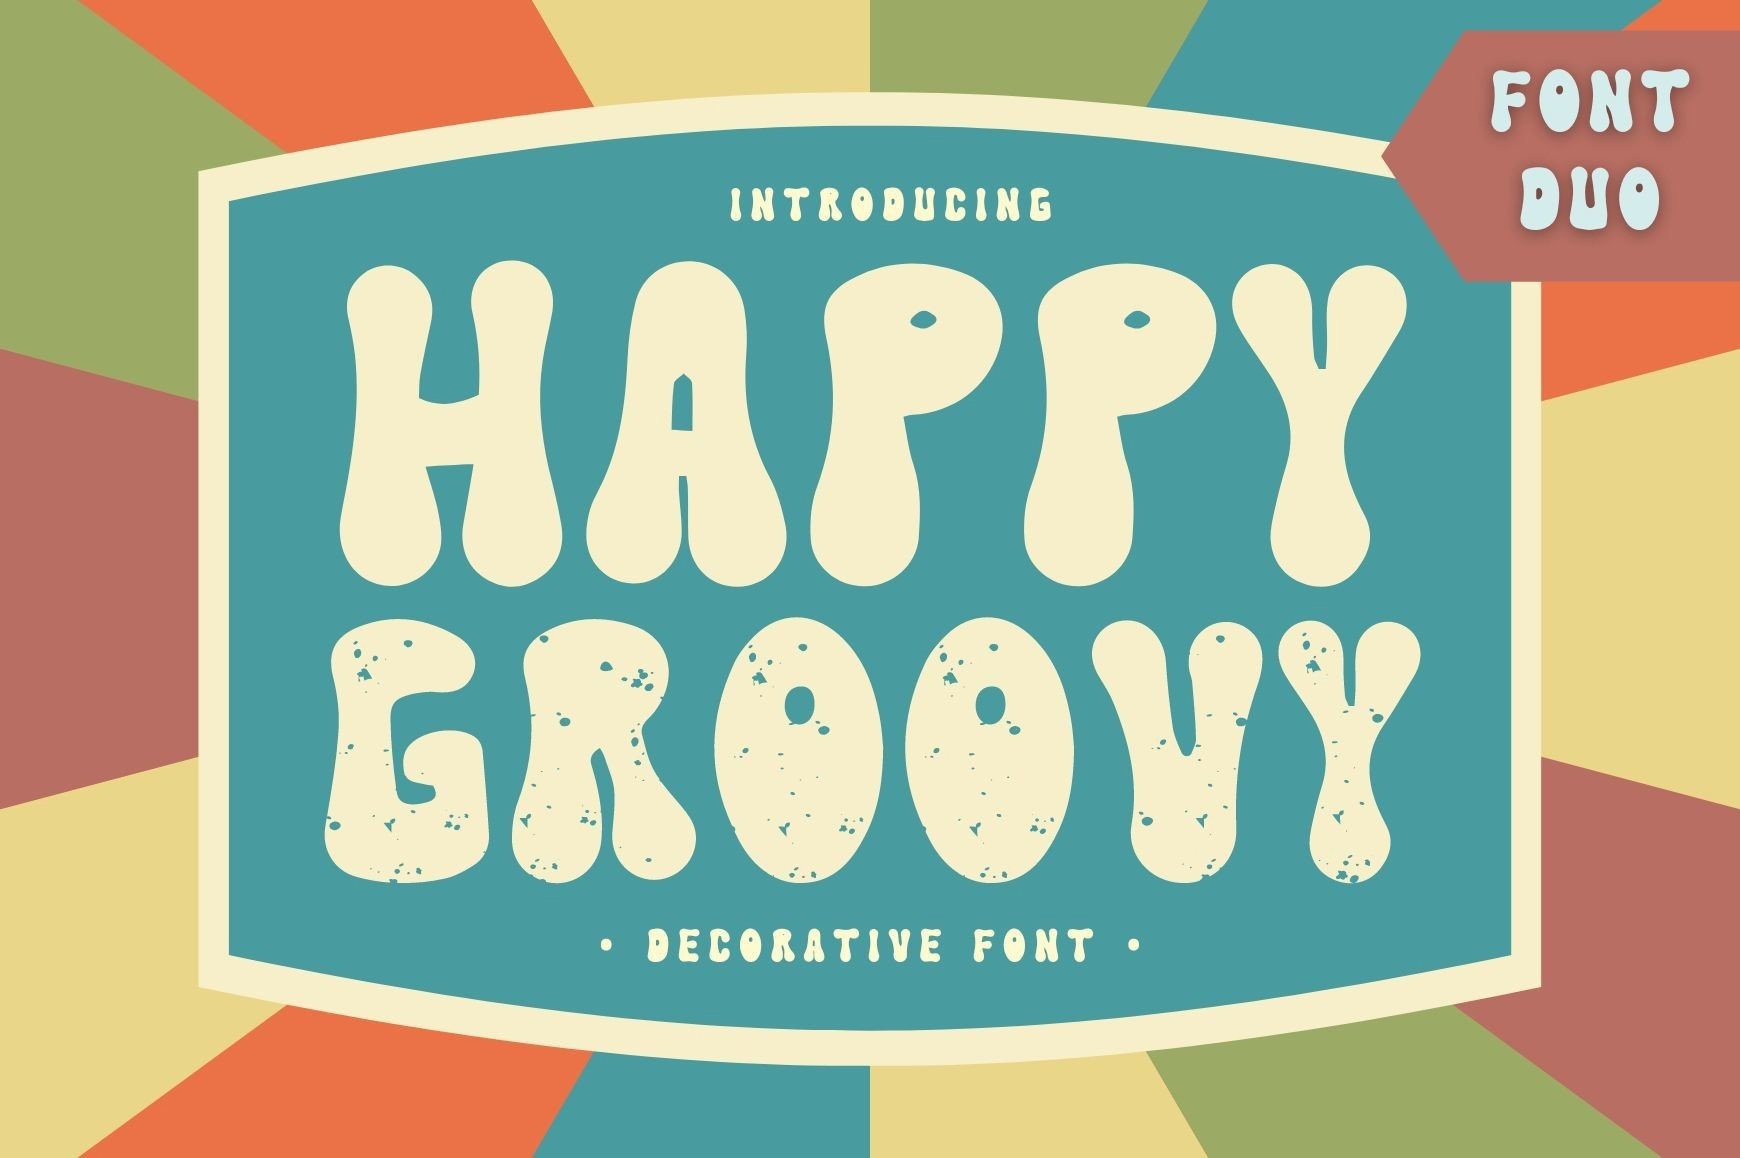 Happy Groovy Font